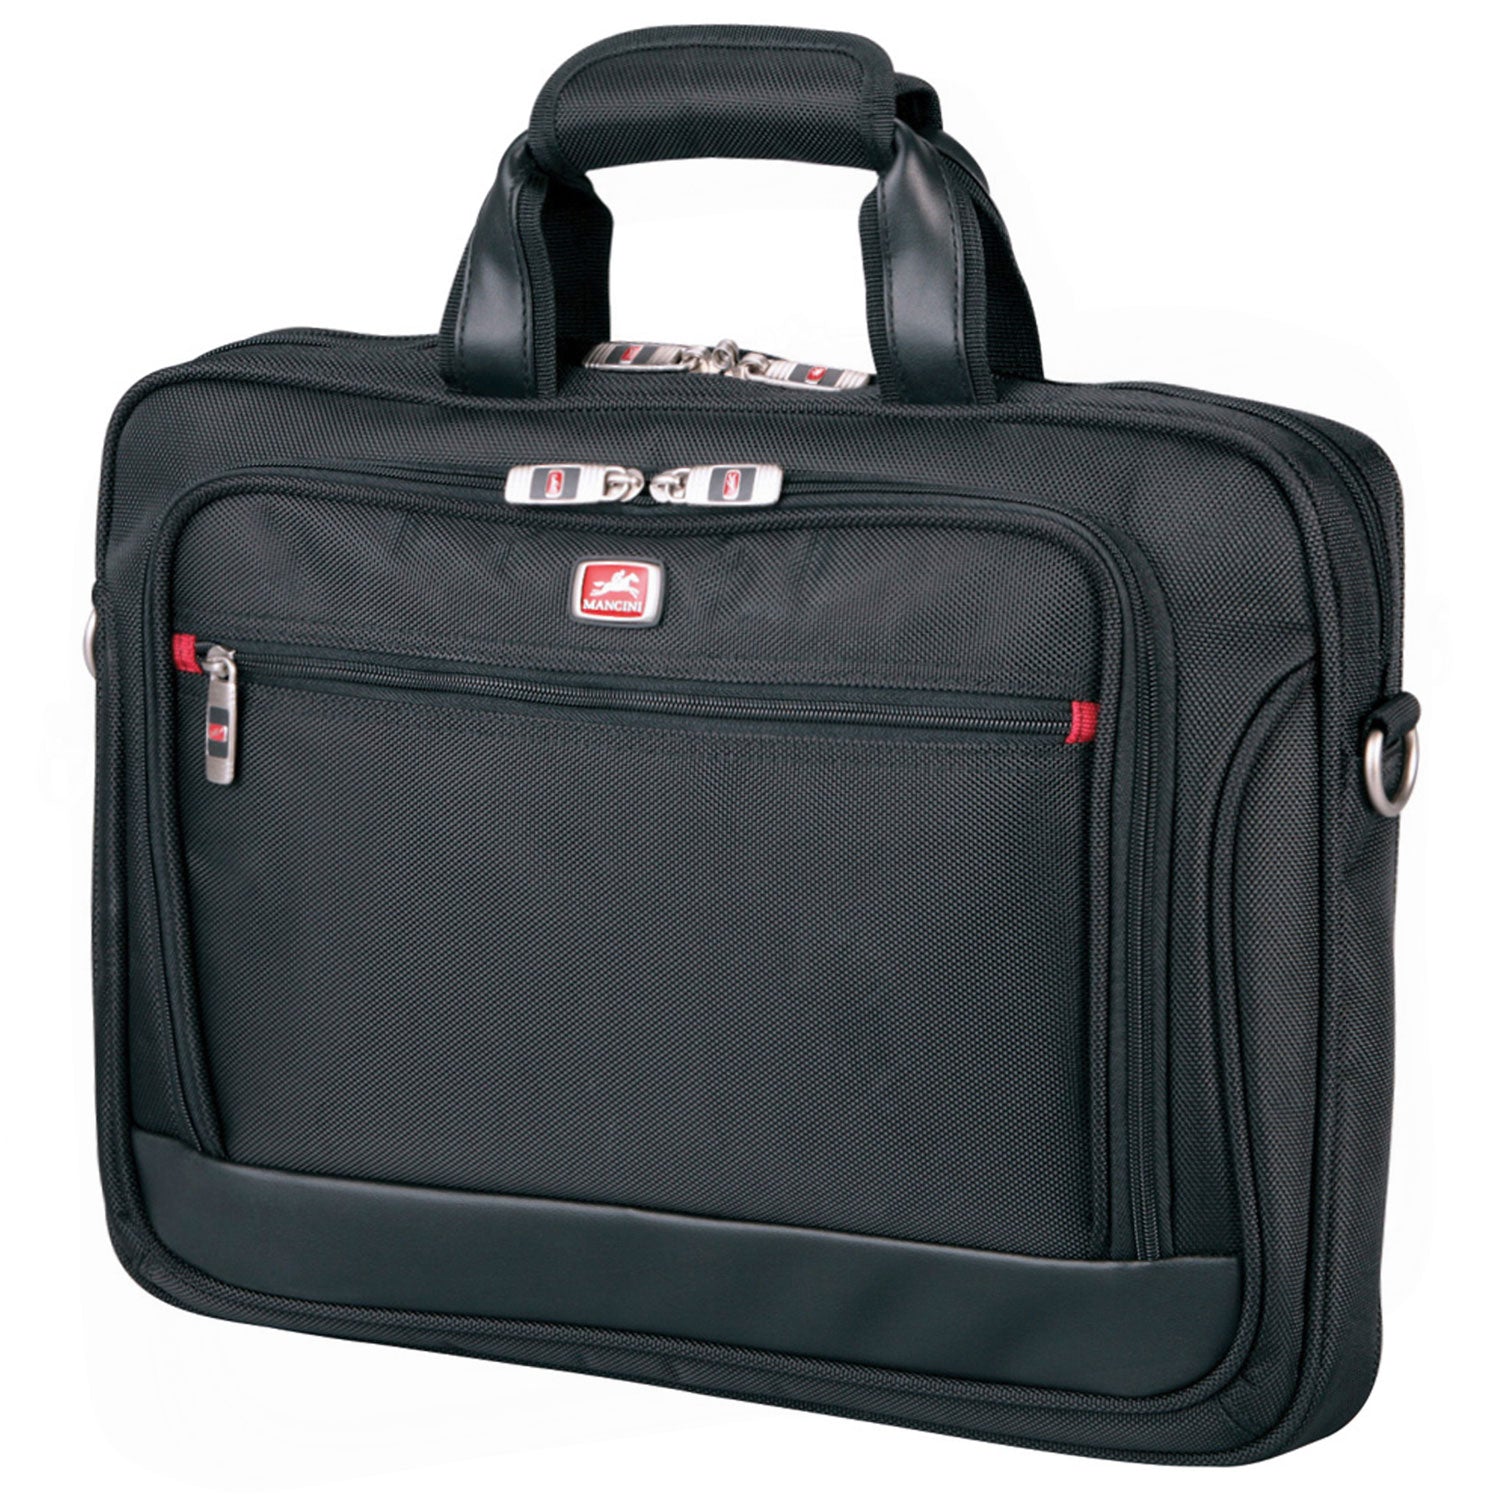 Mancini Leather Compucase Slim Laptop / Tablet Briefcase with RFID Secure Pocket, 16.25" x 1.75" x 12", Black